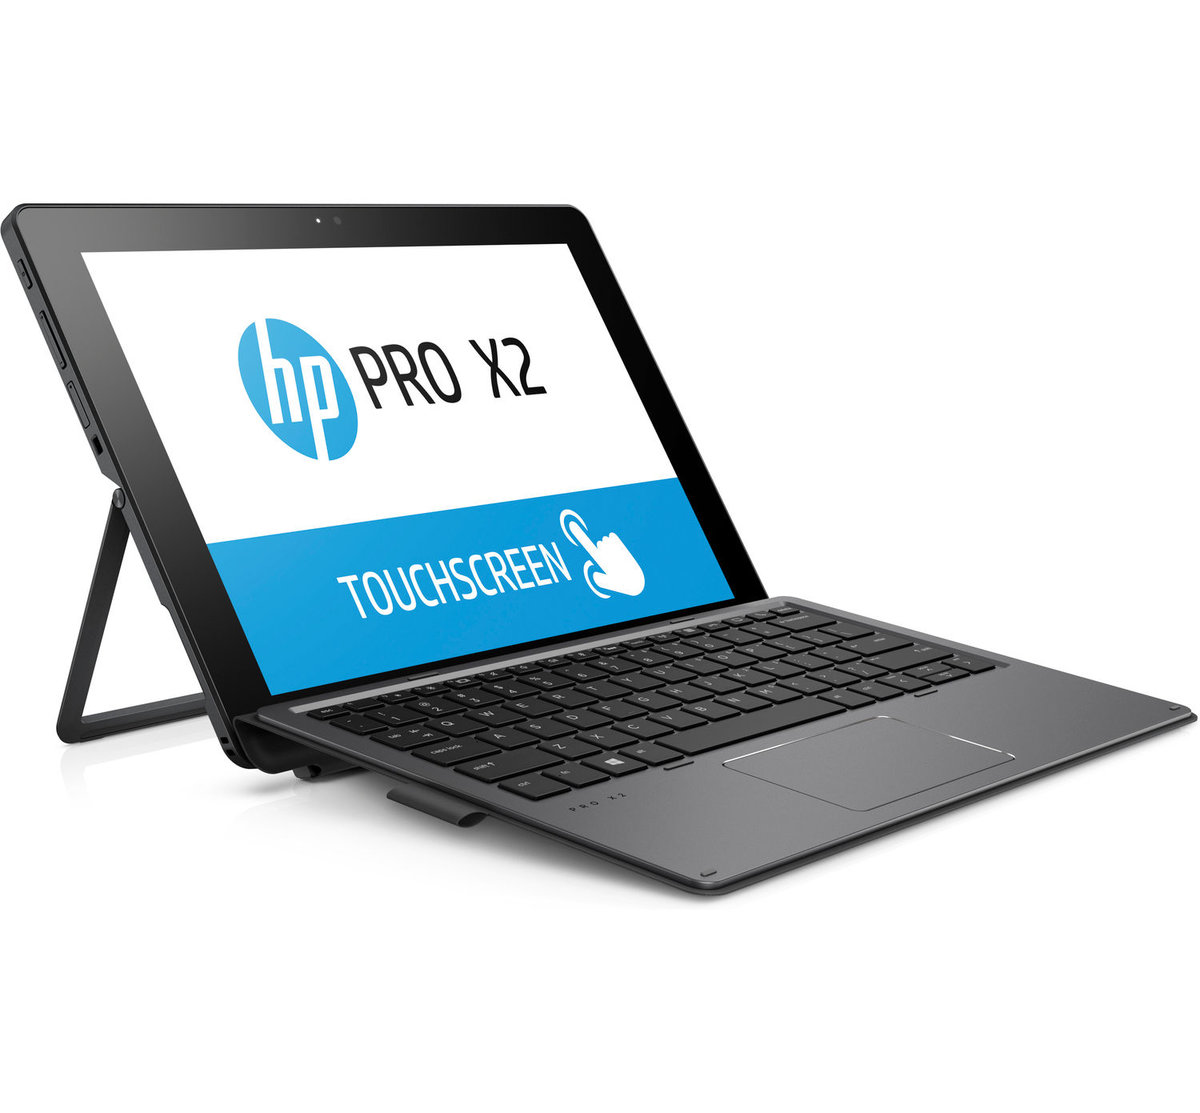 HP Pro x2 612 G2